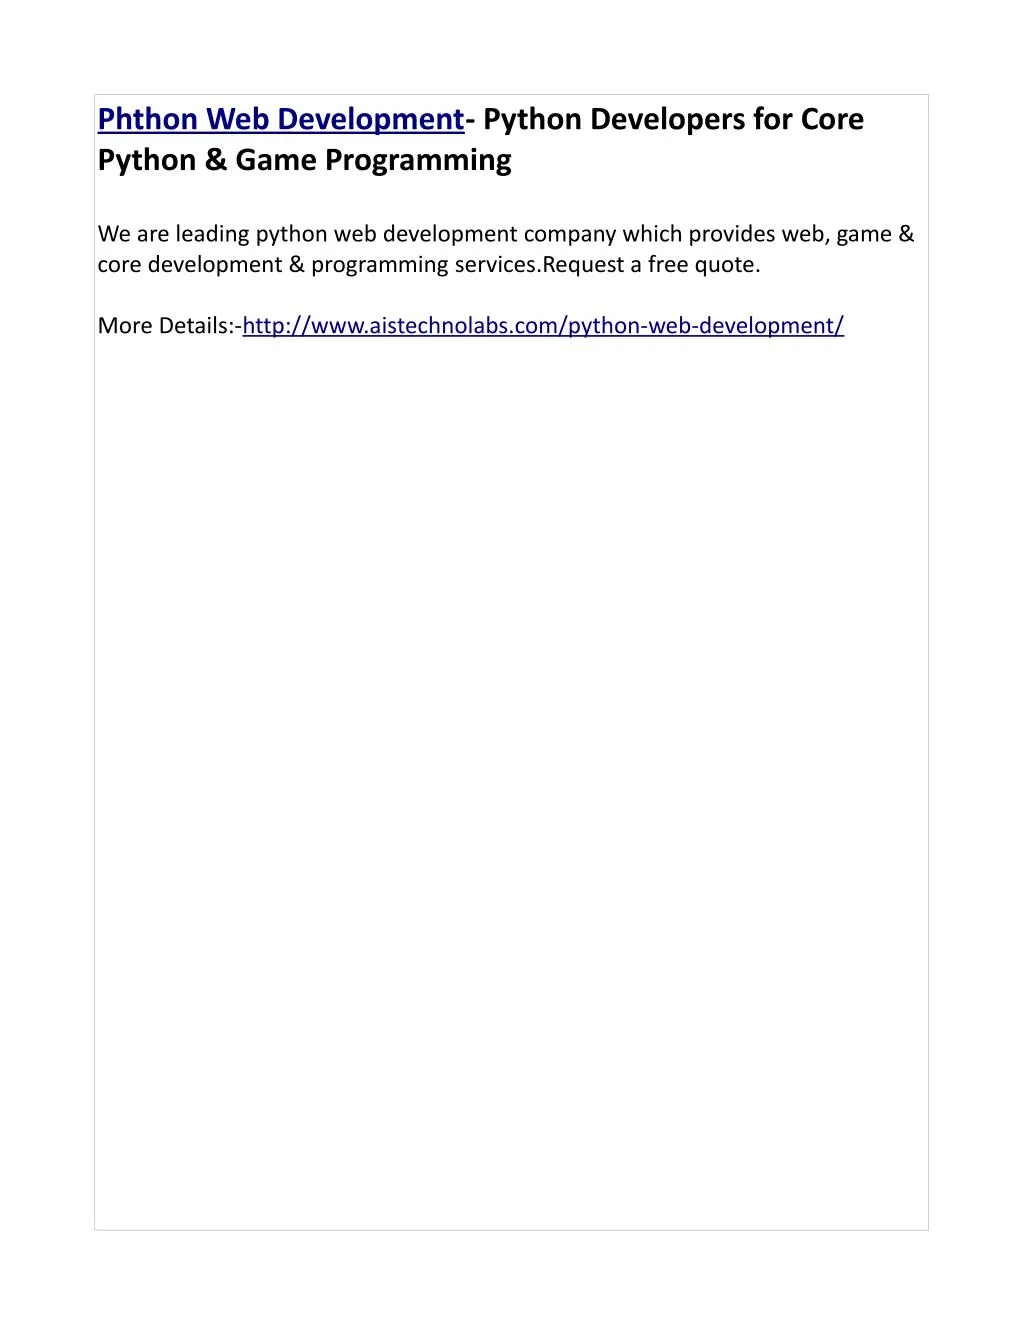 phthon web development python developers for core